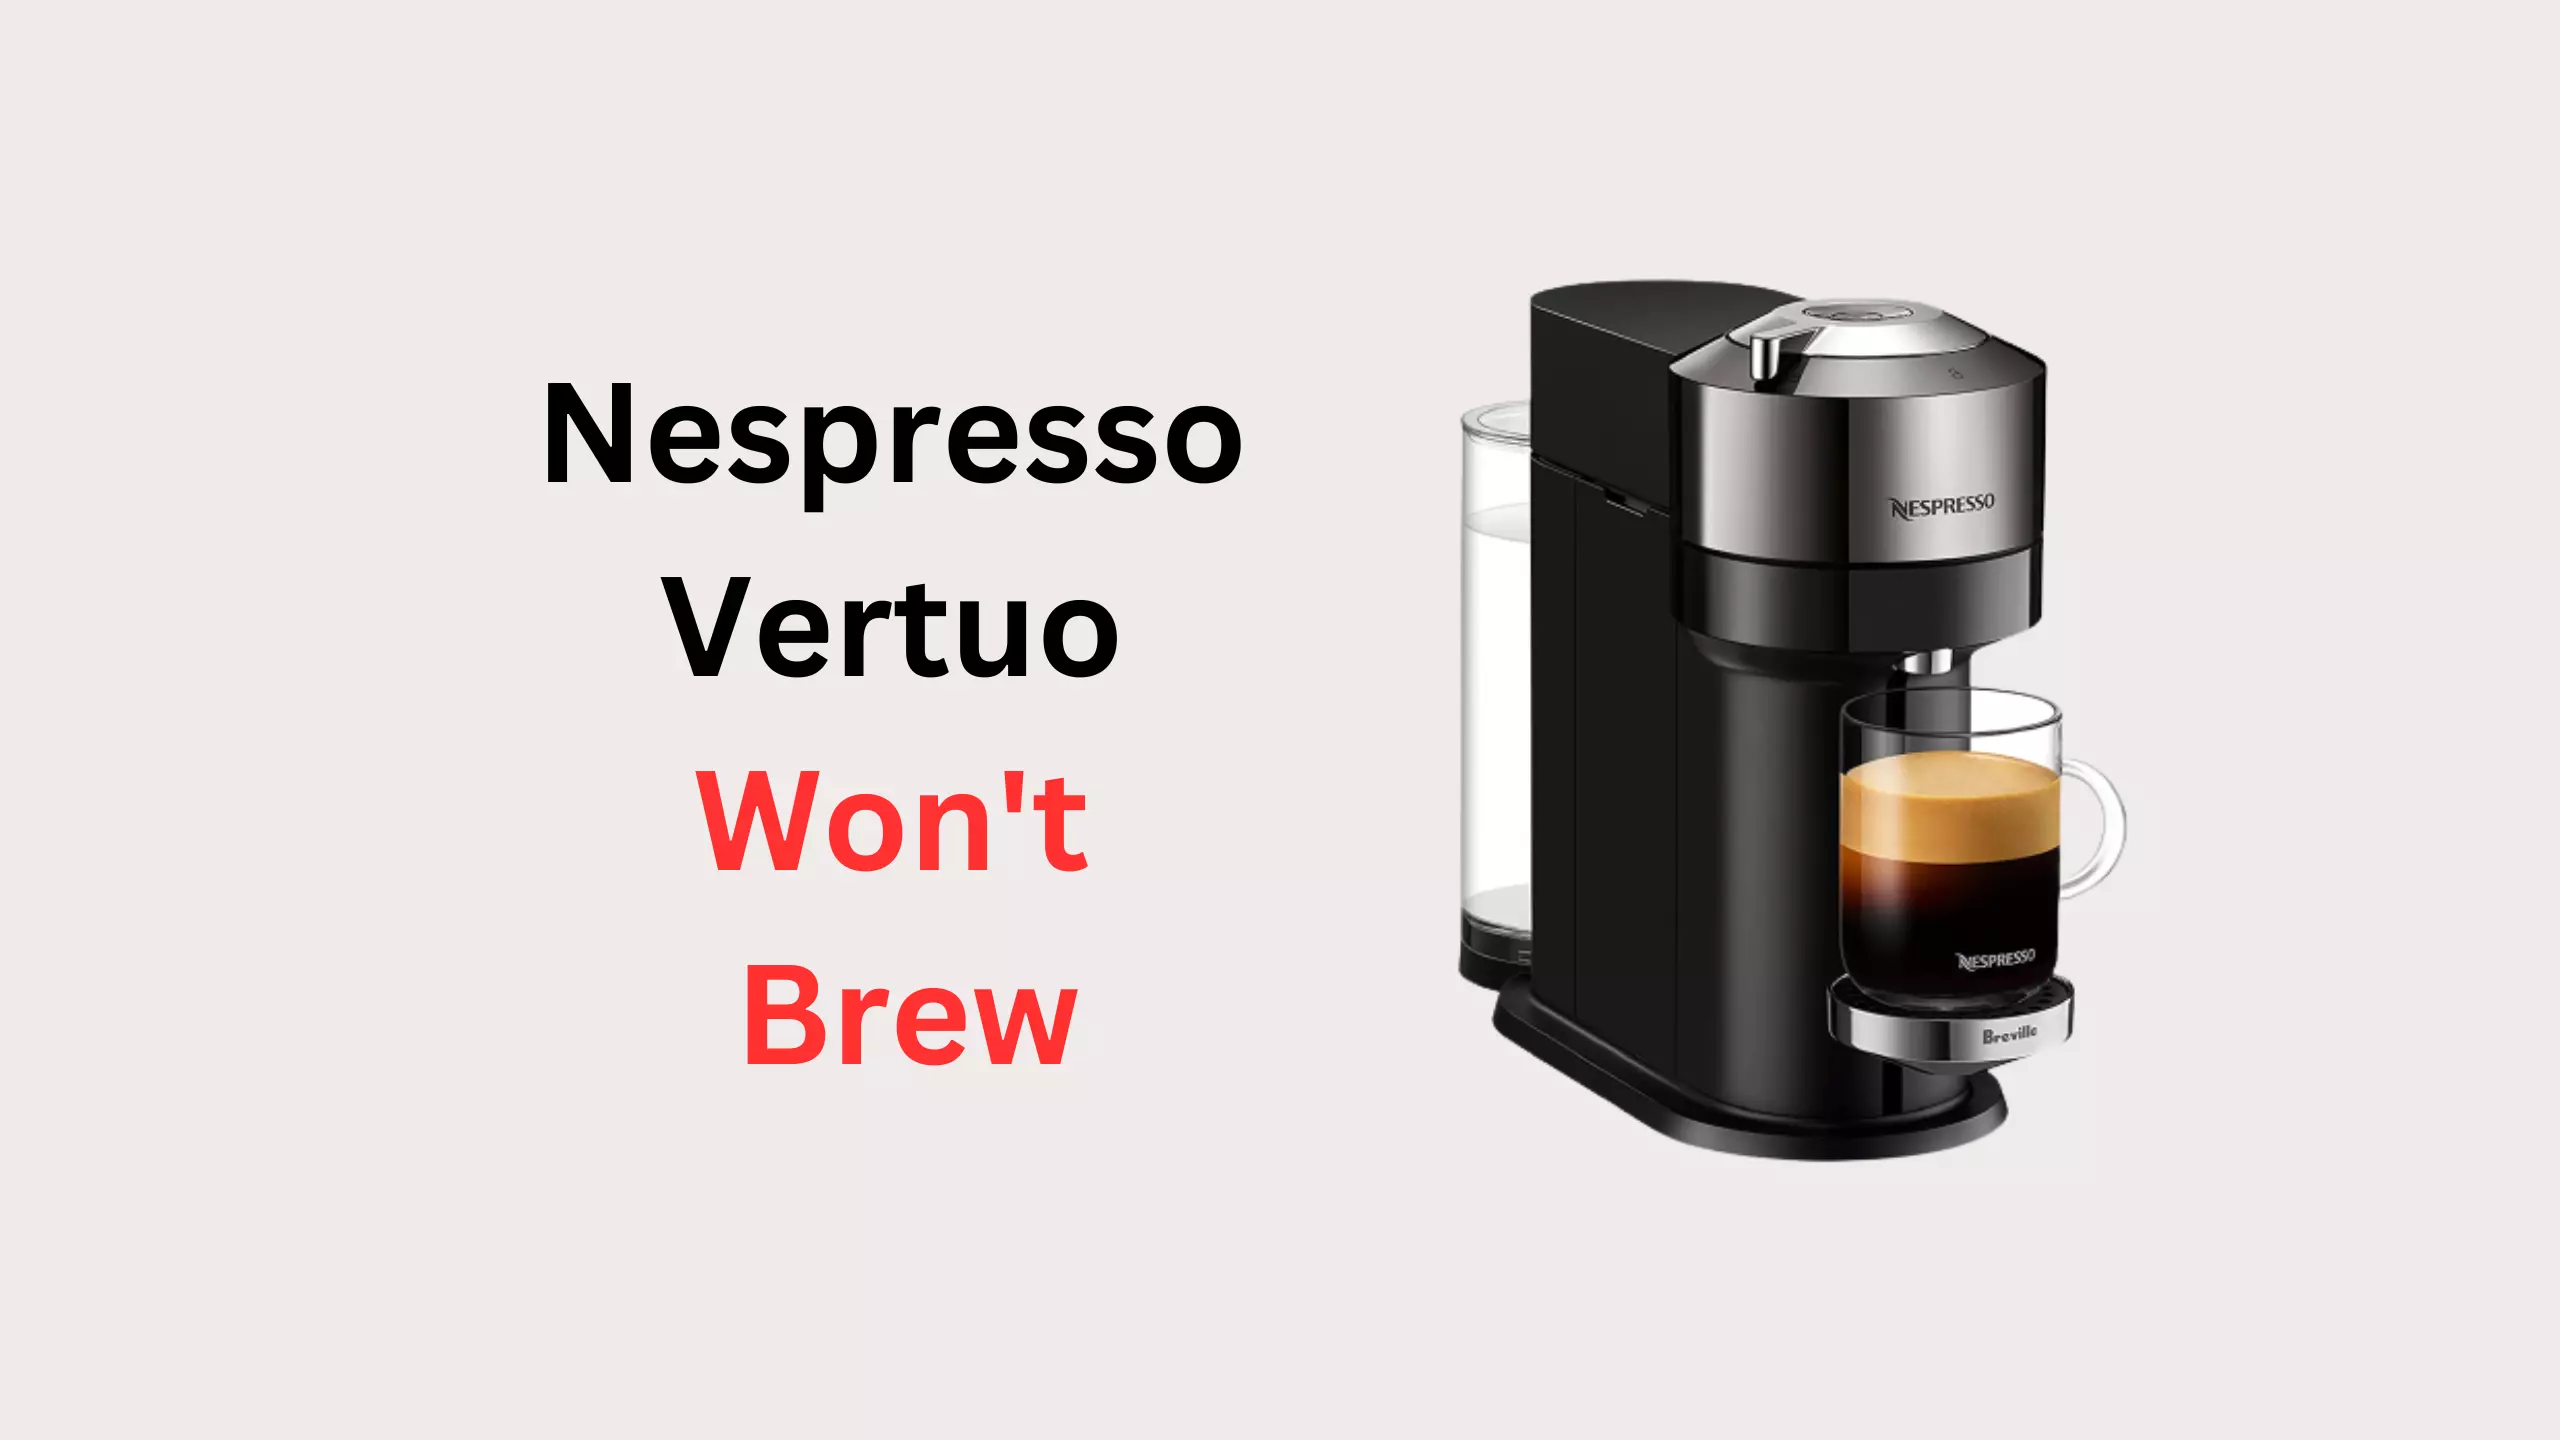 nespresso vertuo won't brew